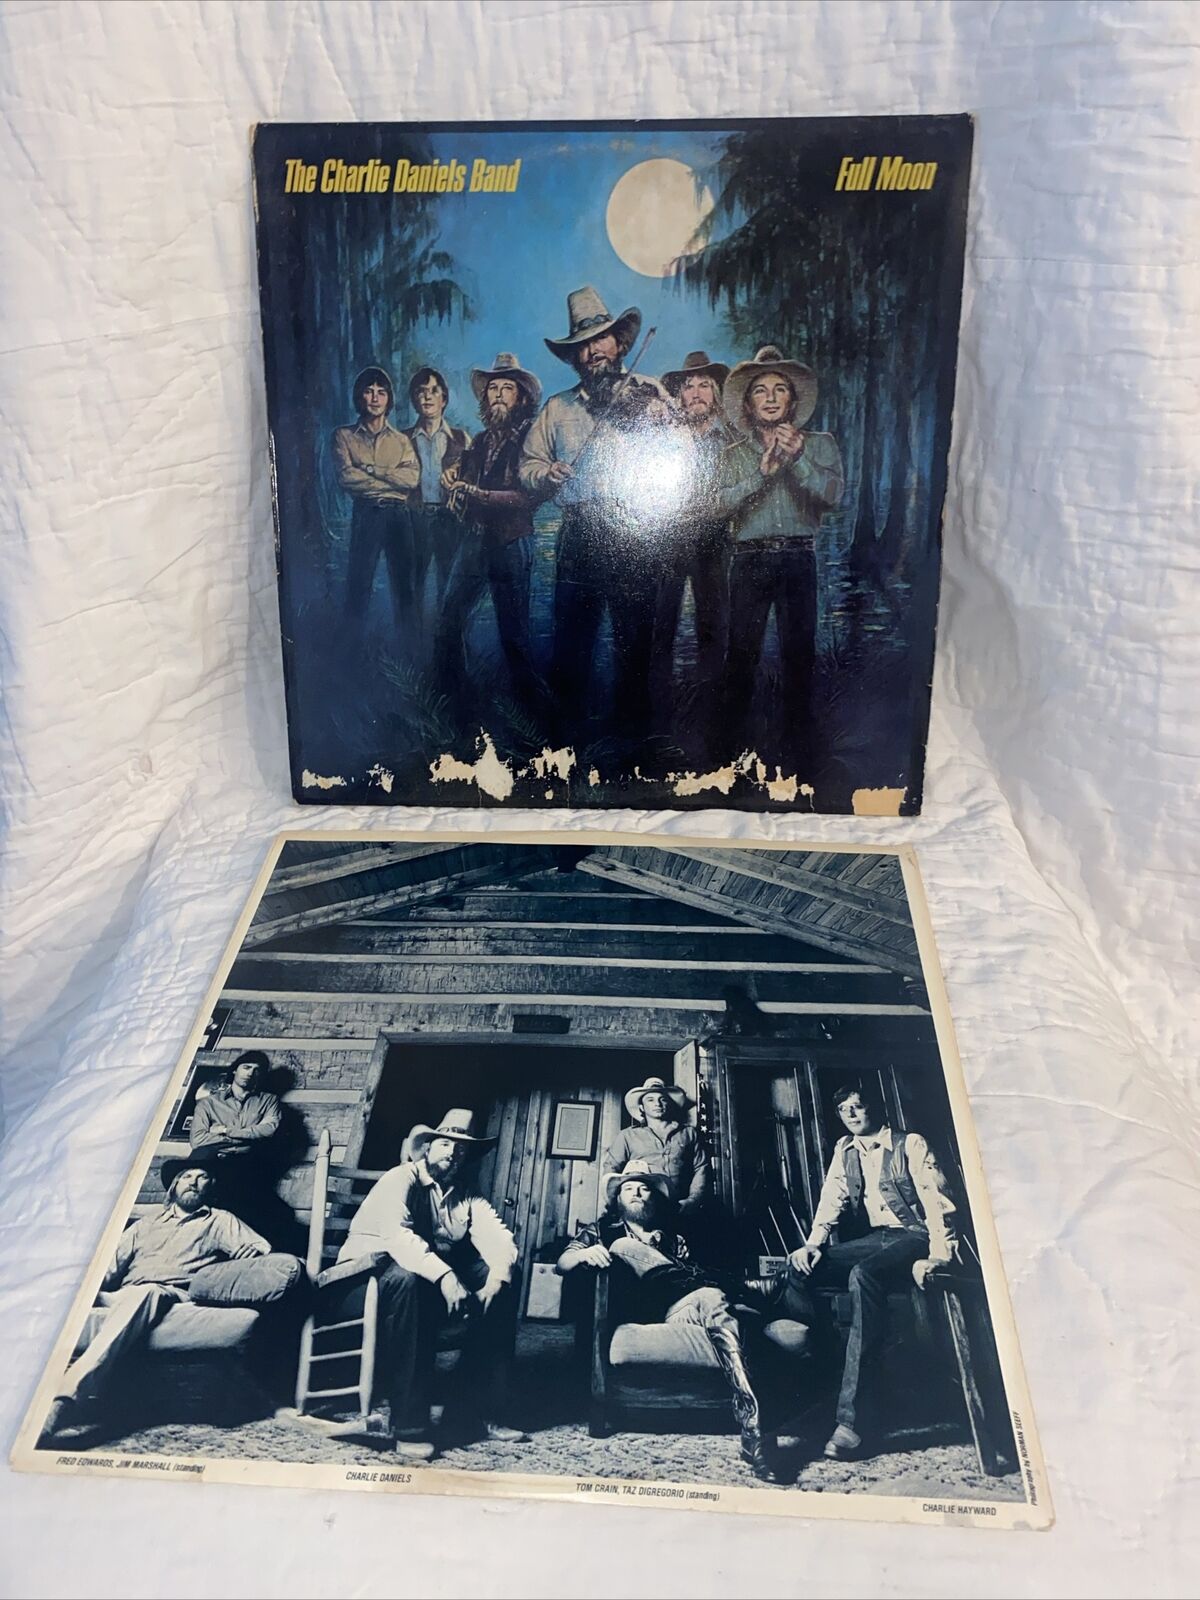 The Charlie Daniels Band Full Moon 1980 Epic 36571 Record Album Vinyl LP